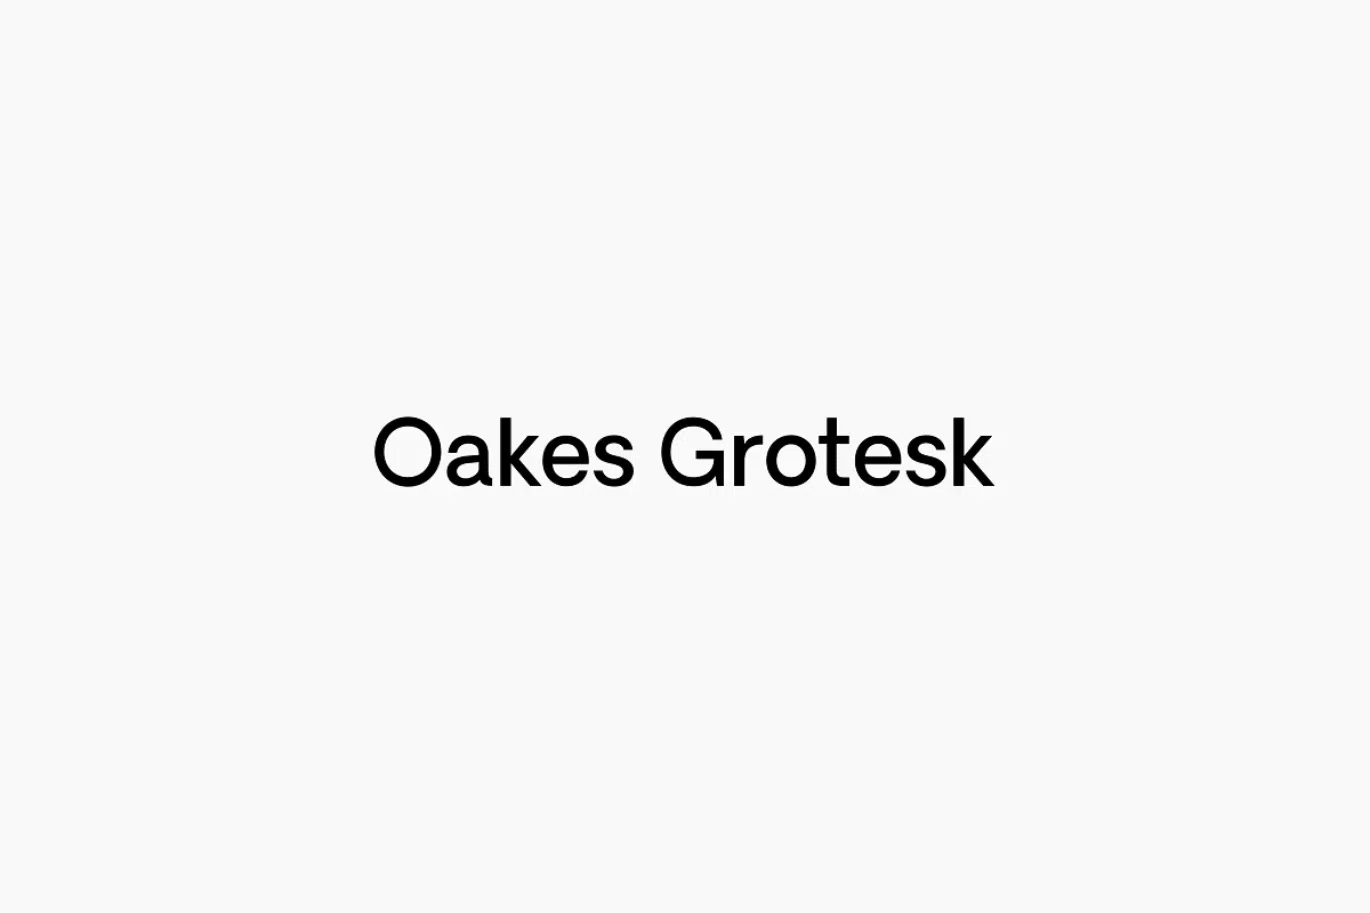 Oakes Font Similar To Raleway